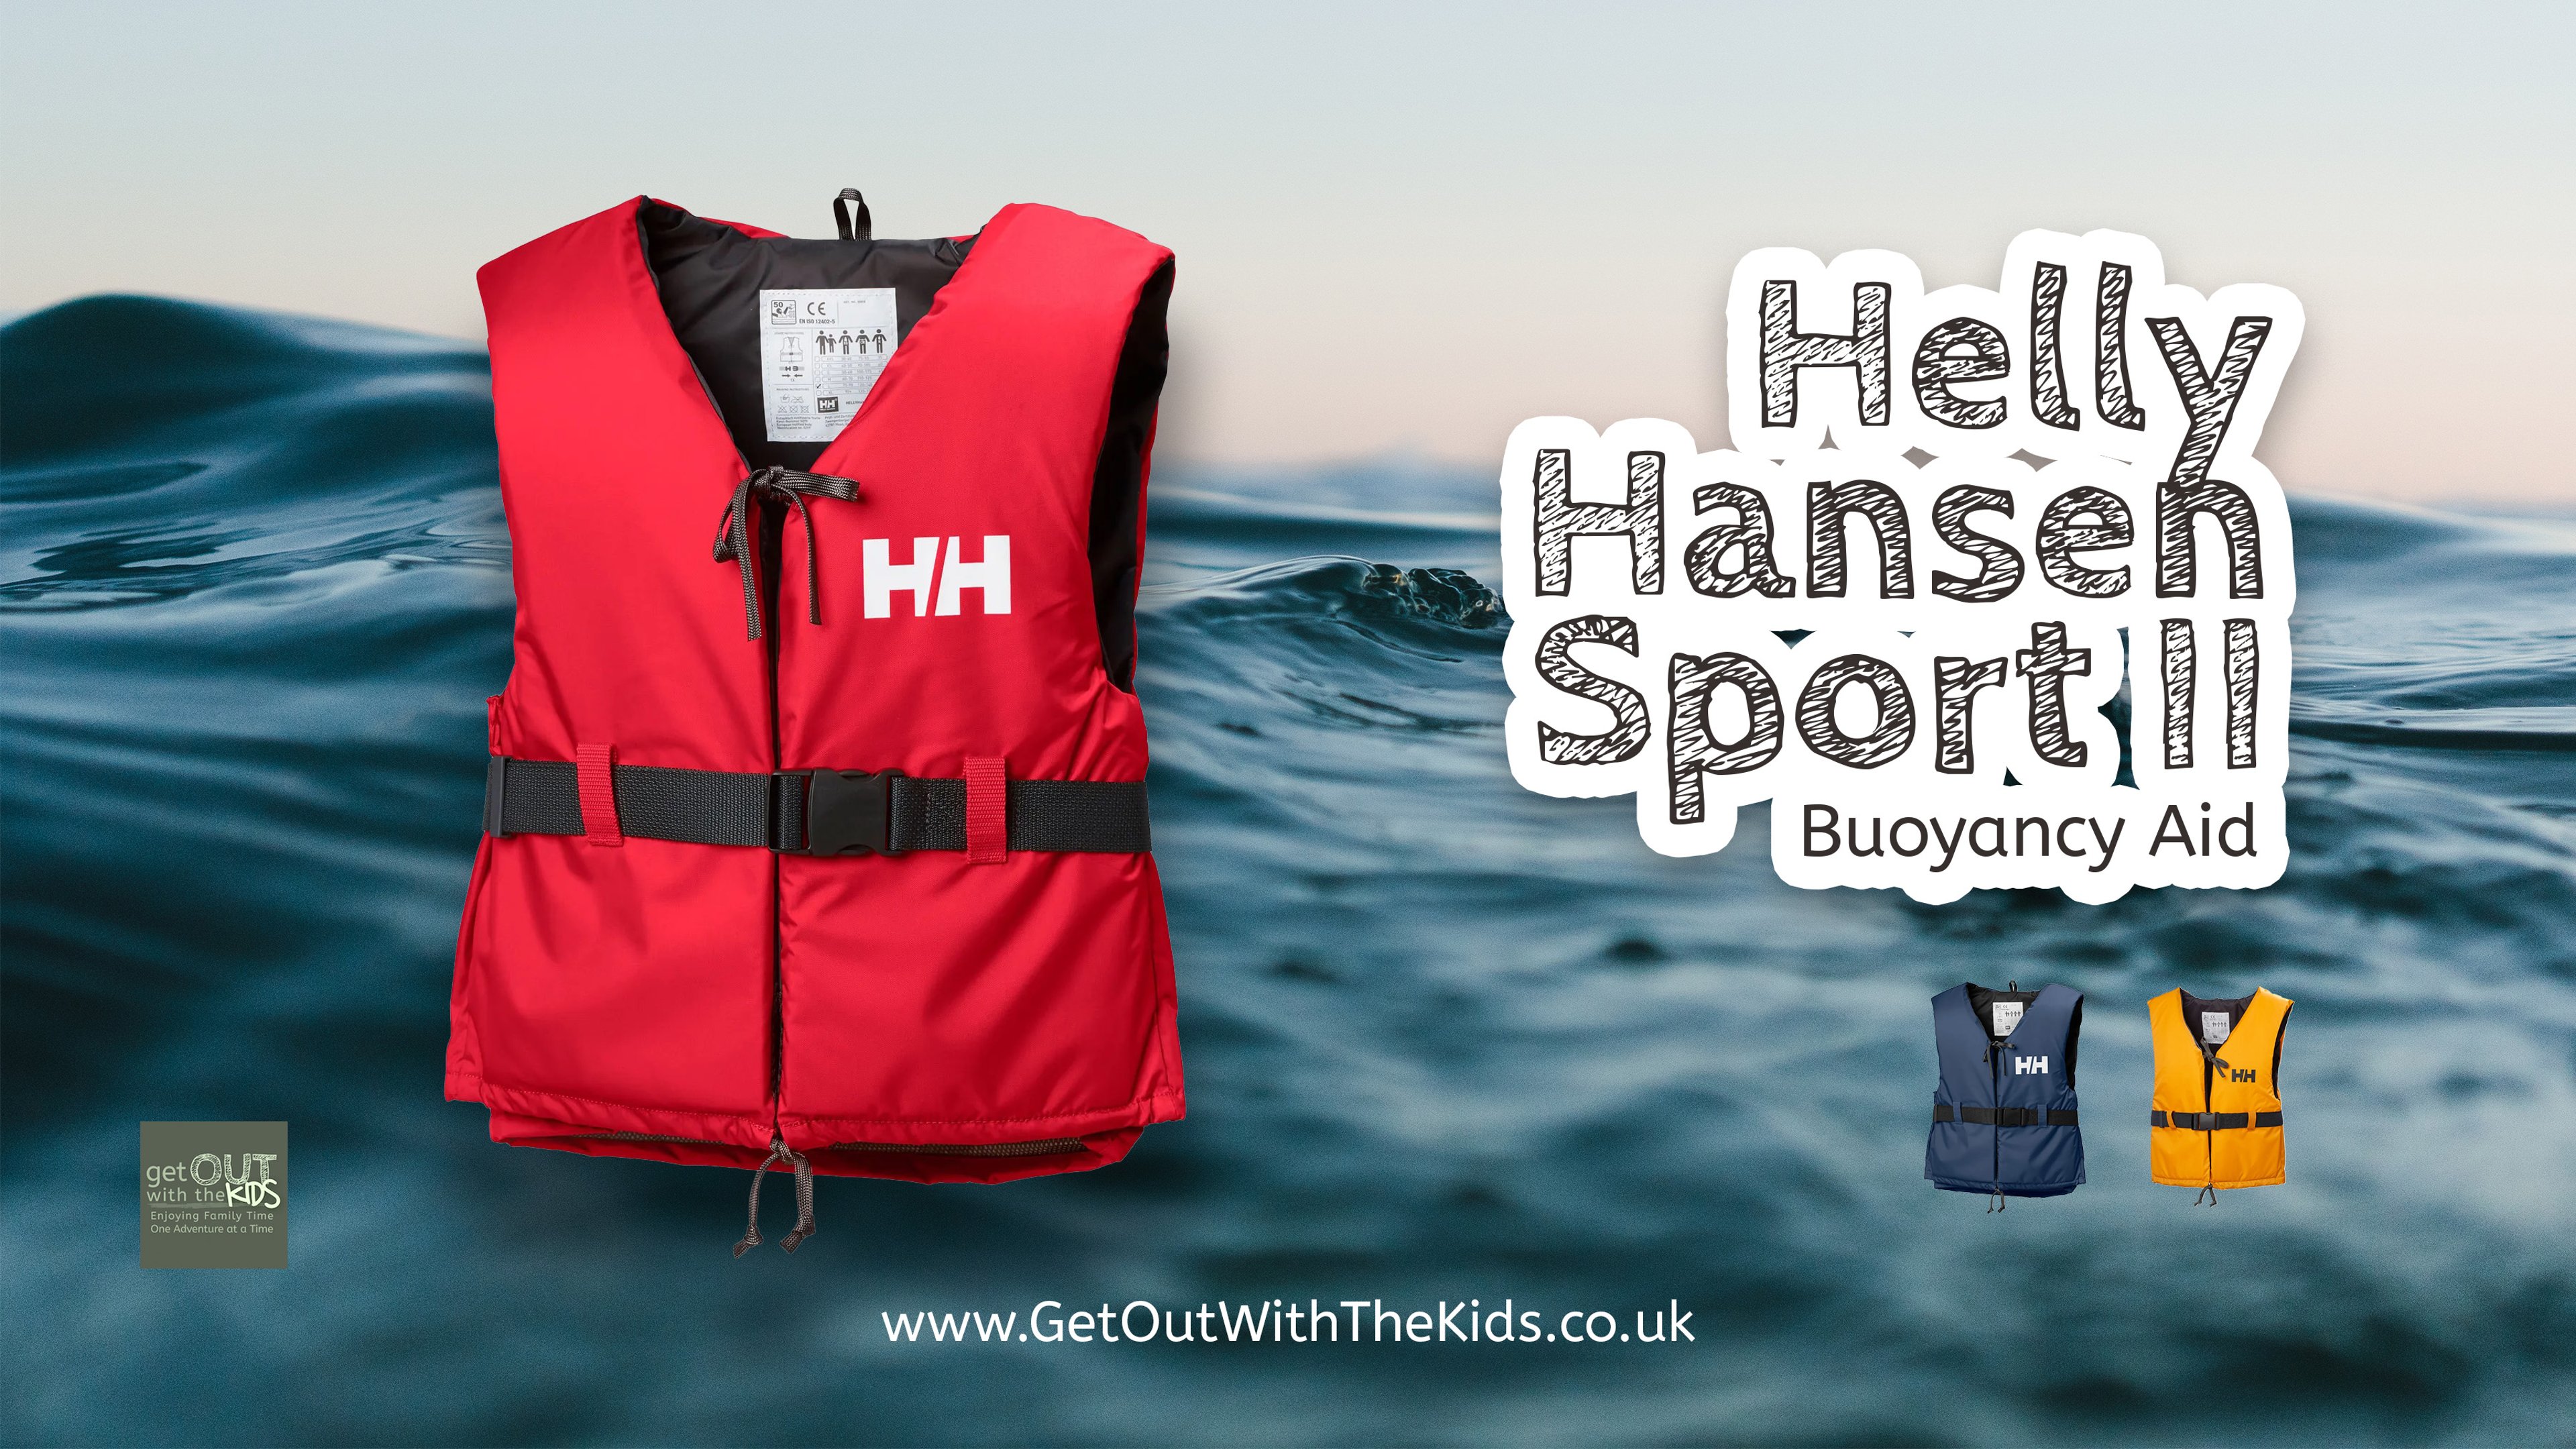 The Helly Hansen buoyancy aid